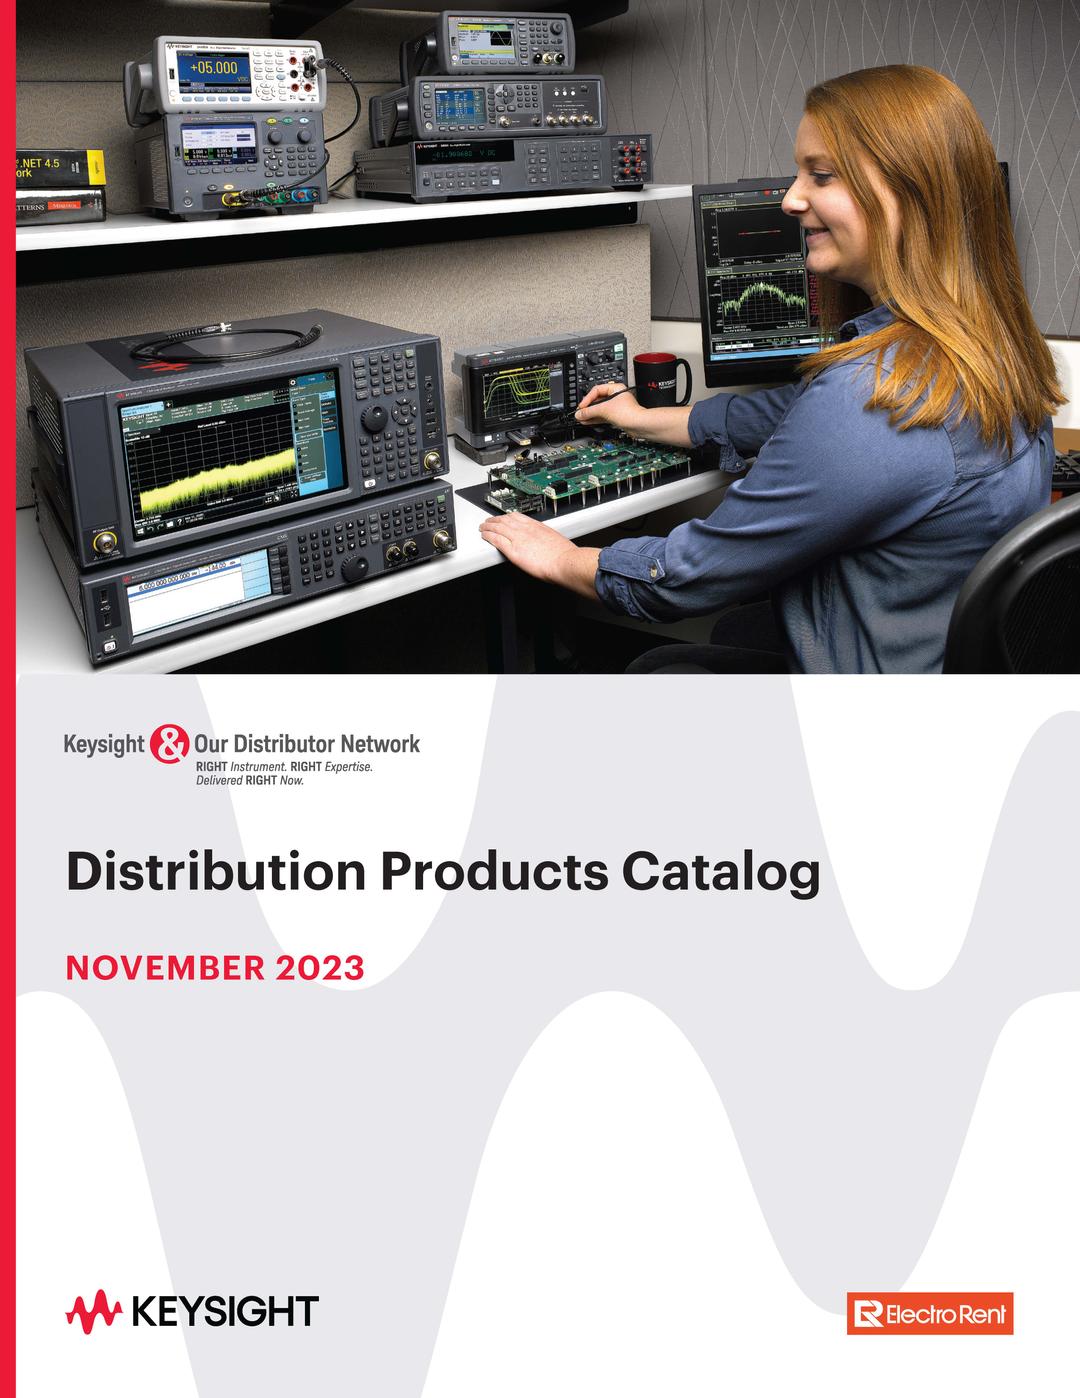 Keysight Distribution Products Catalogue, image